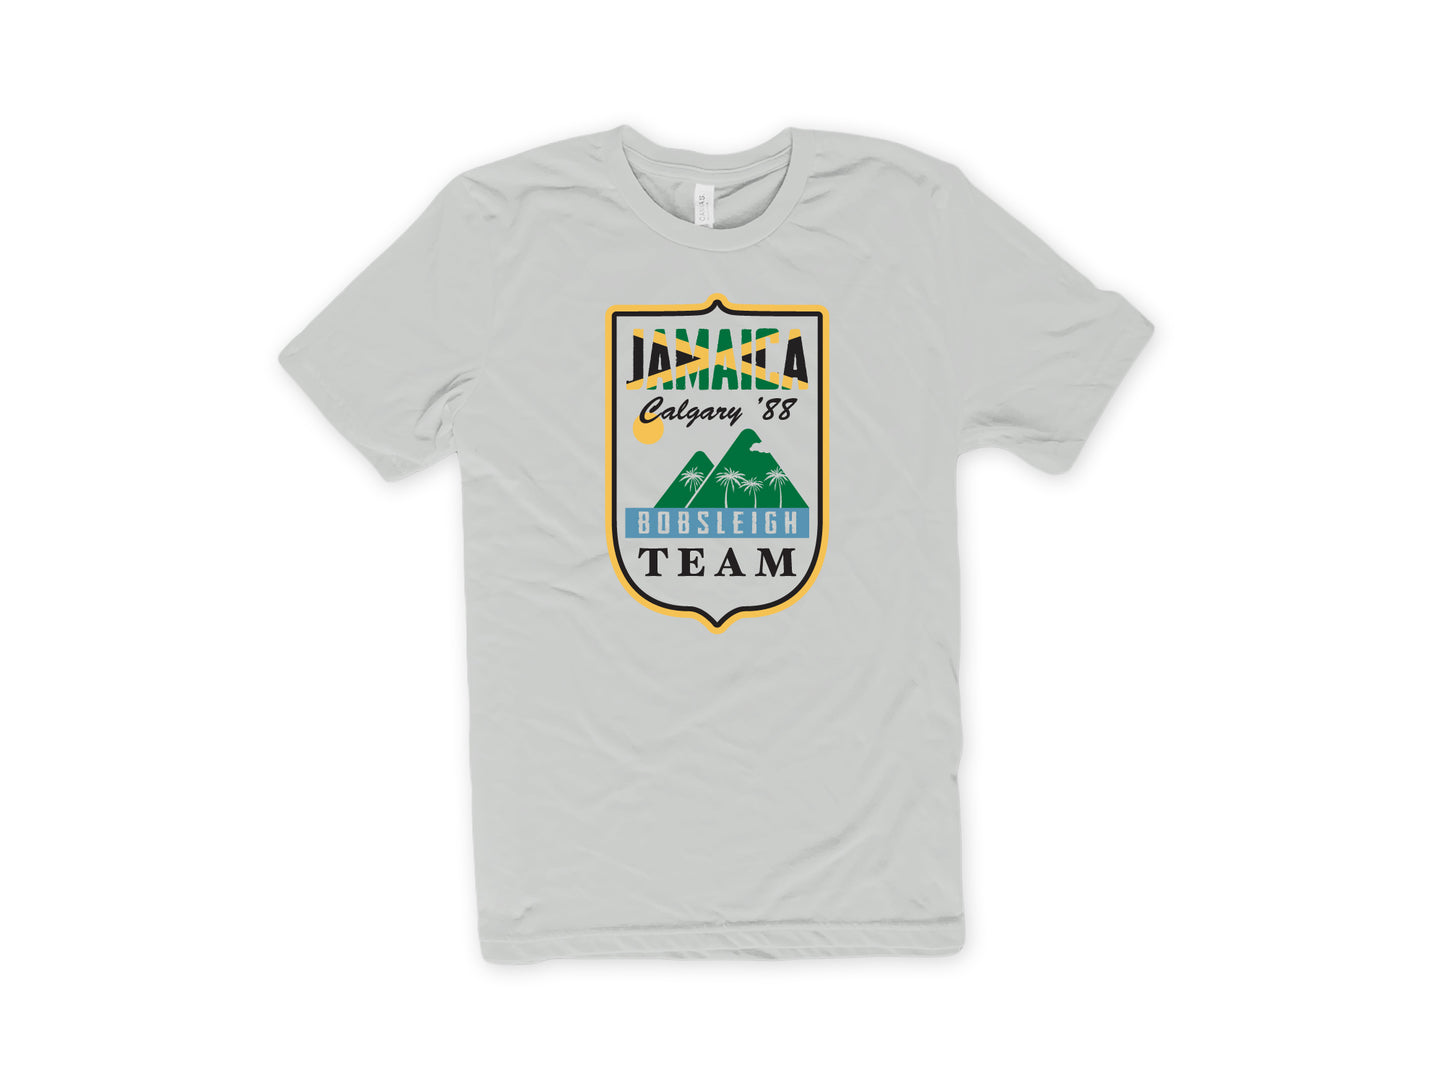 Cool Runnings Jamaica Bobsled Team 88' Calgary Olympics Vintage Shirt SILVER